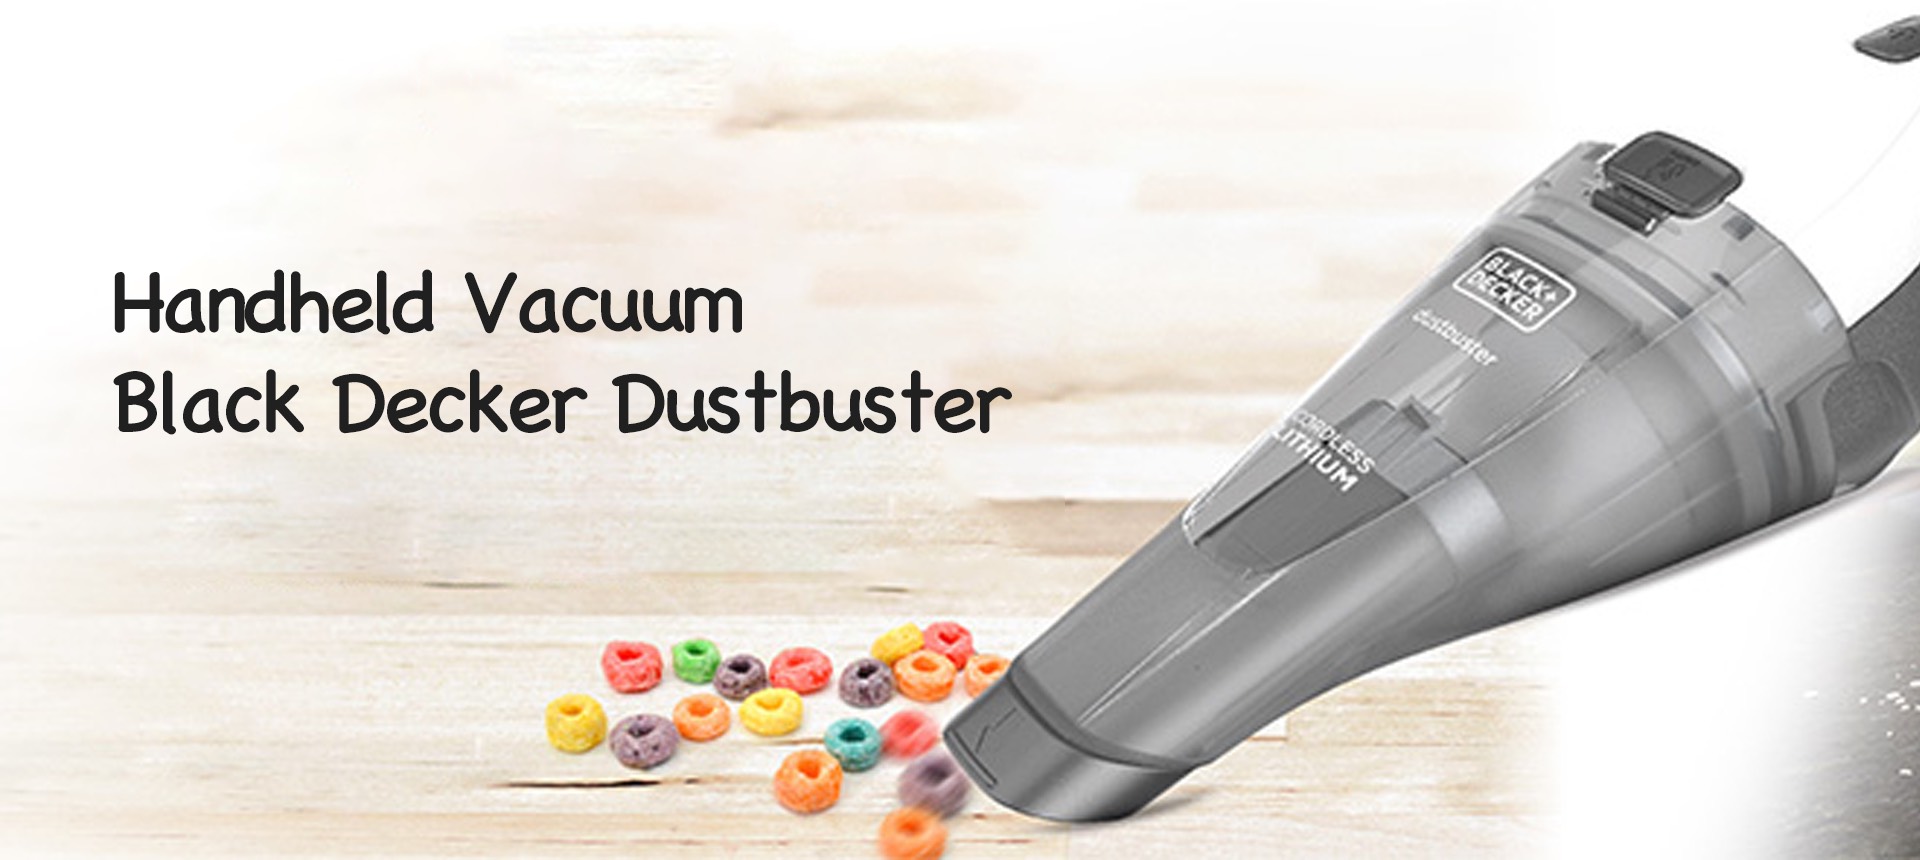 Handheld Vacuum BLACK DECKER Dustbuster